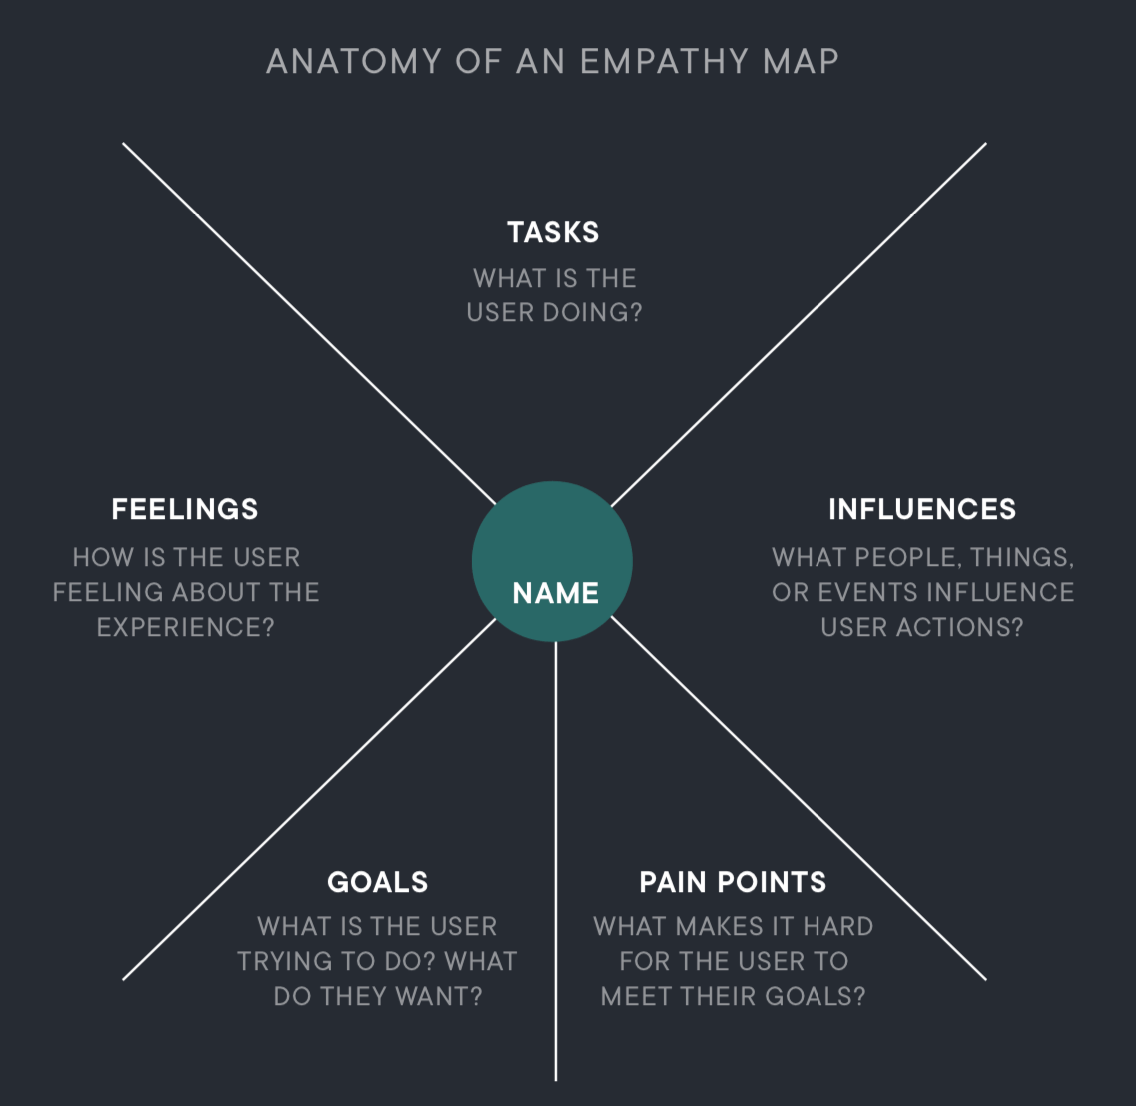 Anatomy of an empathy map